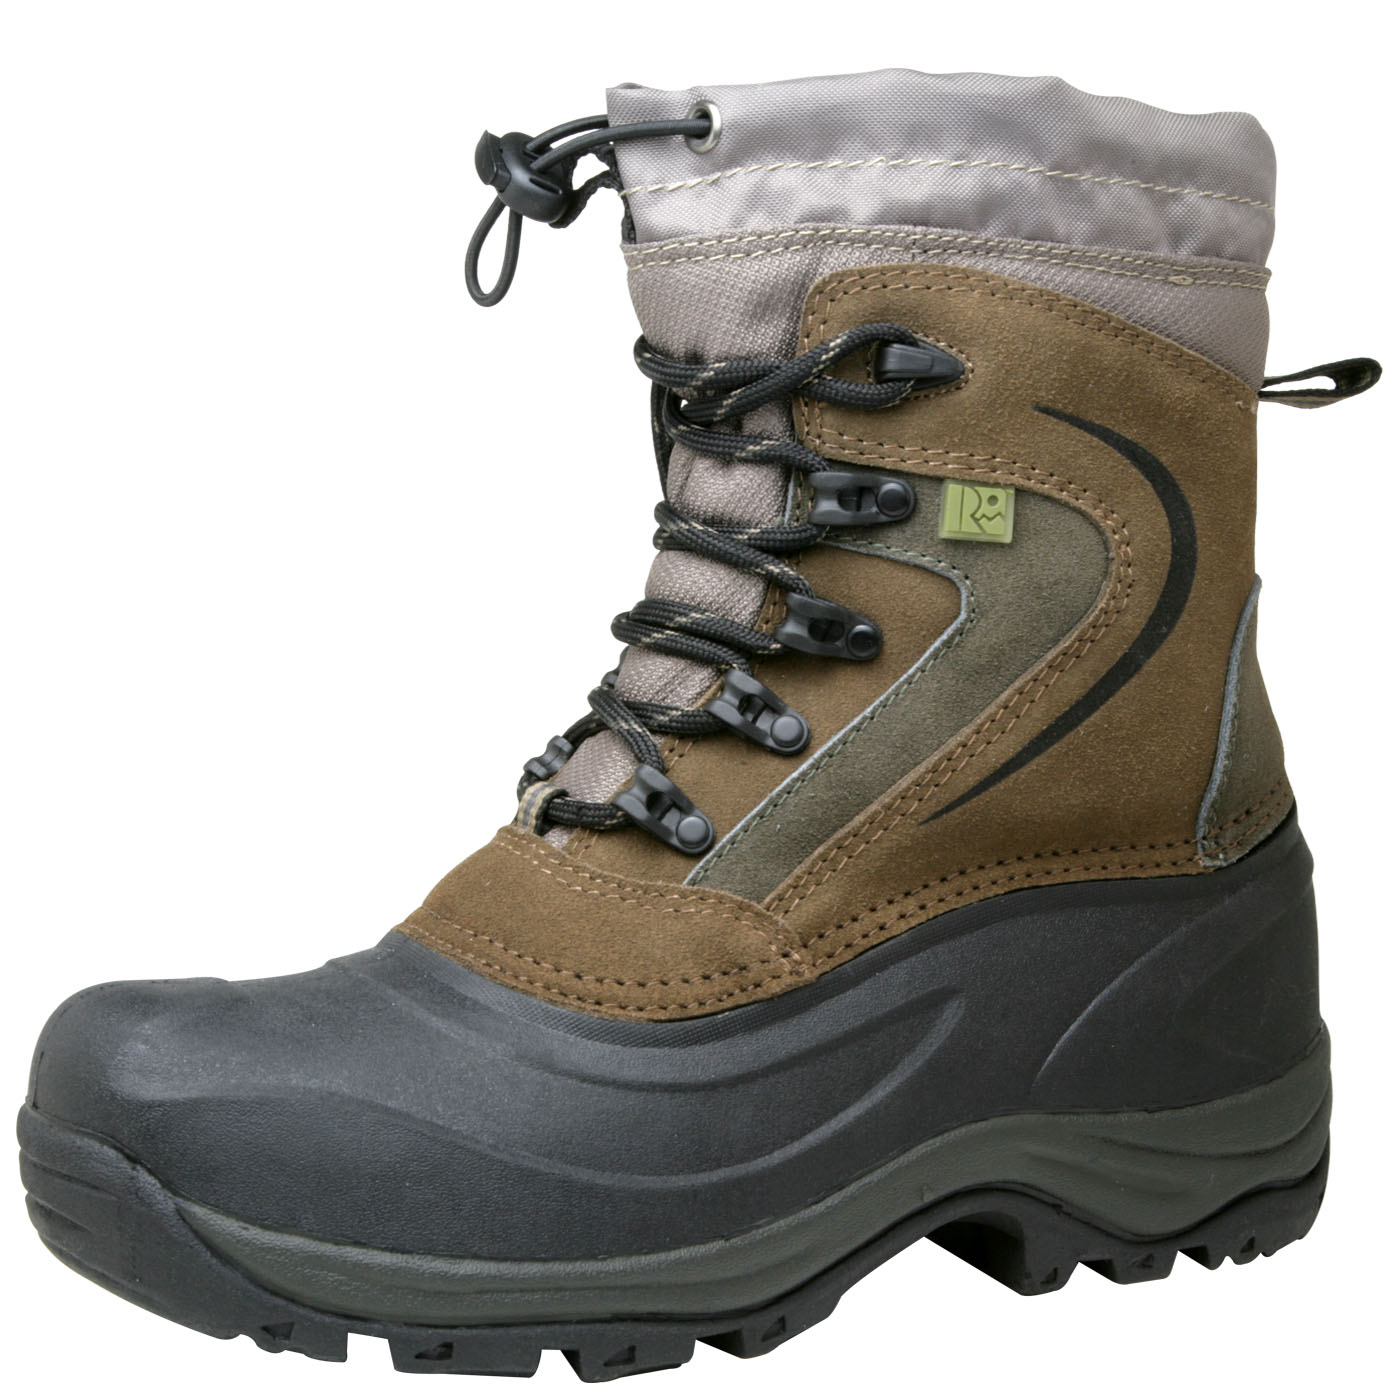 mens waterproof boots menu0027s apex leather waterproof bootmenu0027s apex leather waterproof boot, tan crikznc